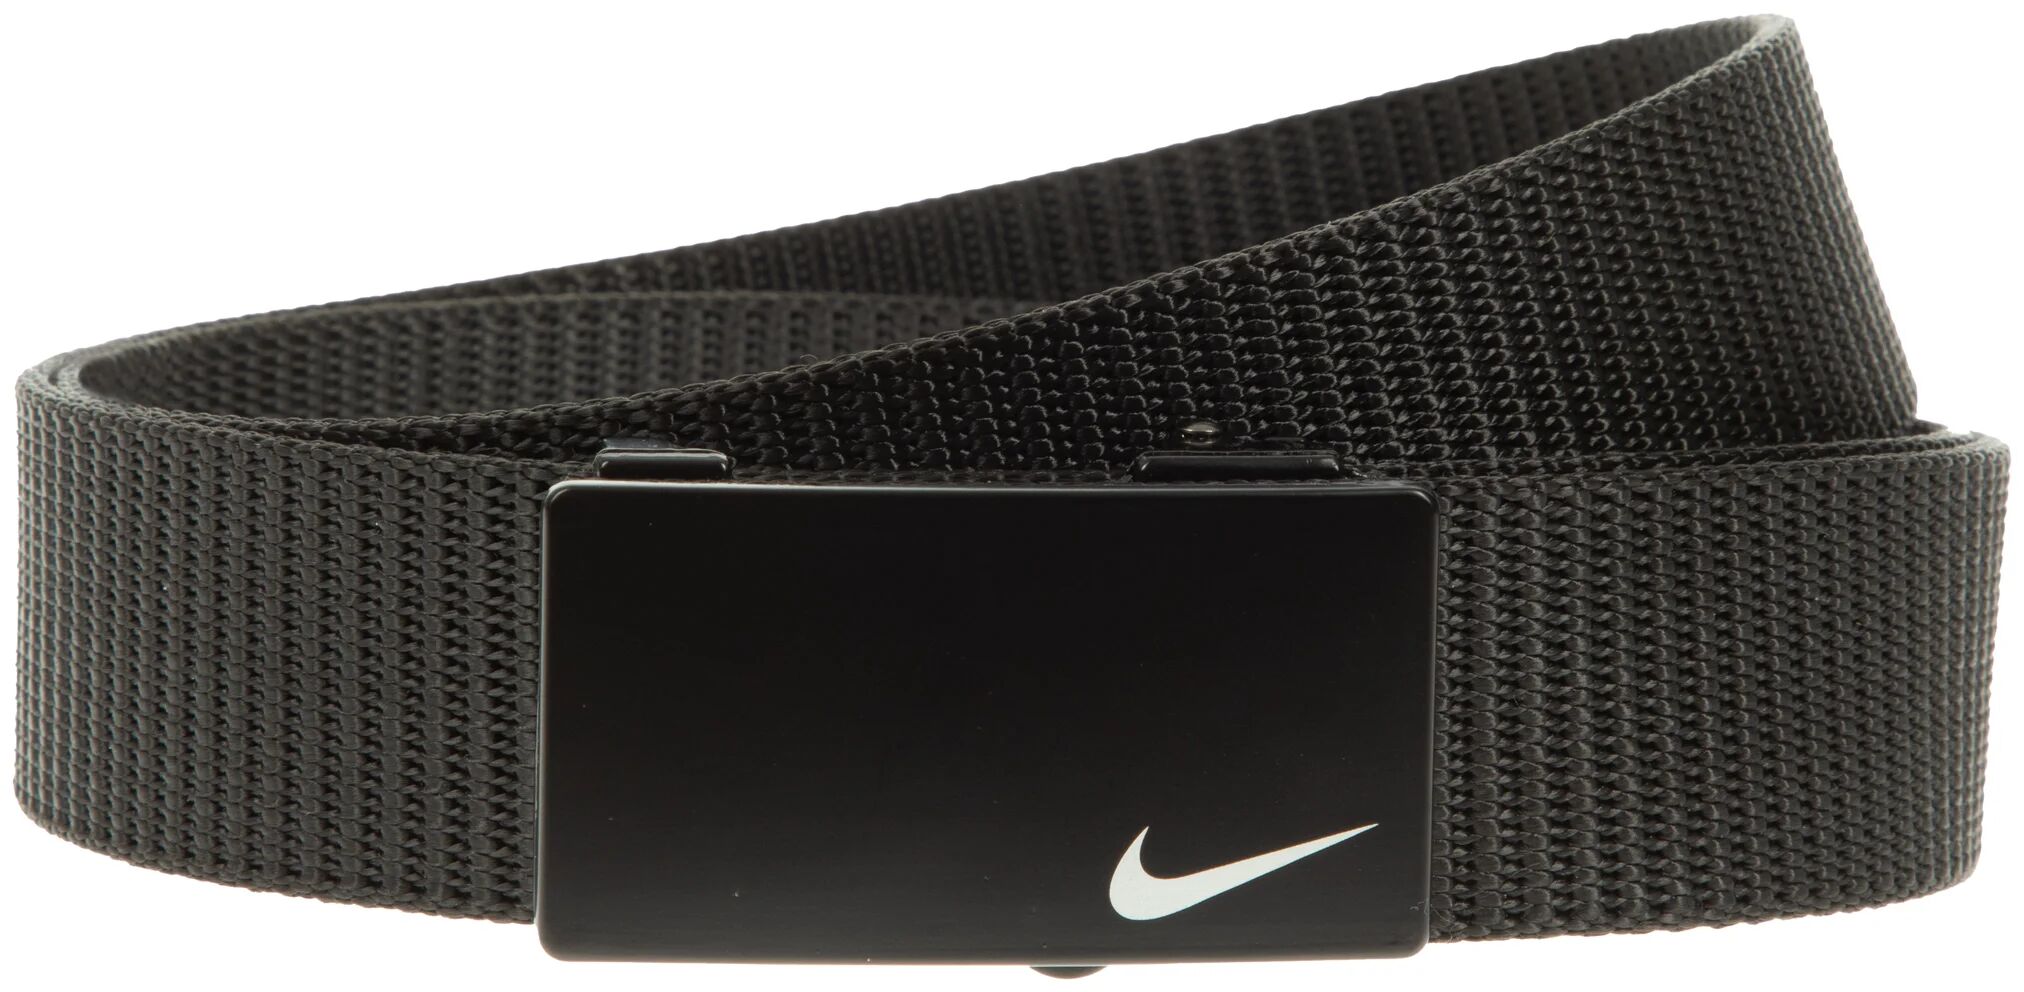 Nike Tech Grip Web Men's Golf Belt - Black, Size: Small (30-32)